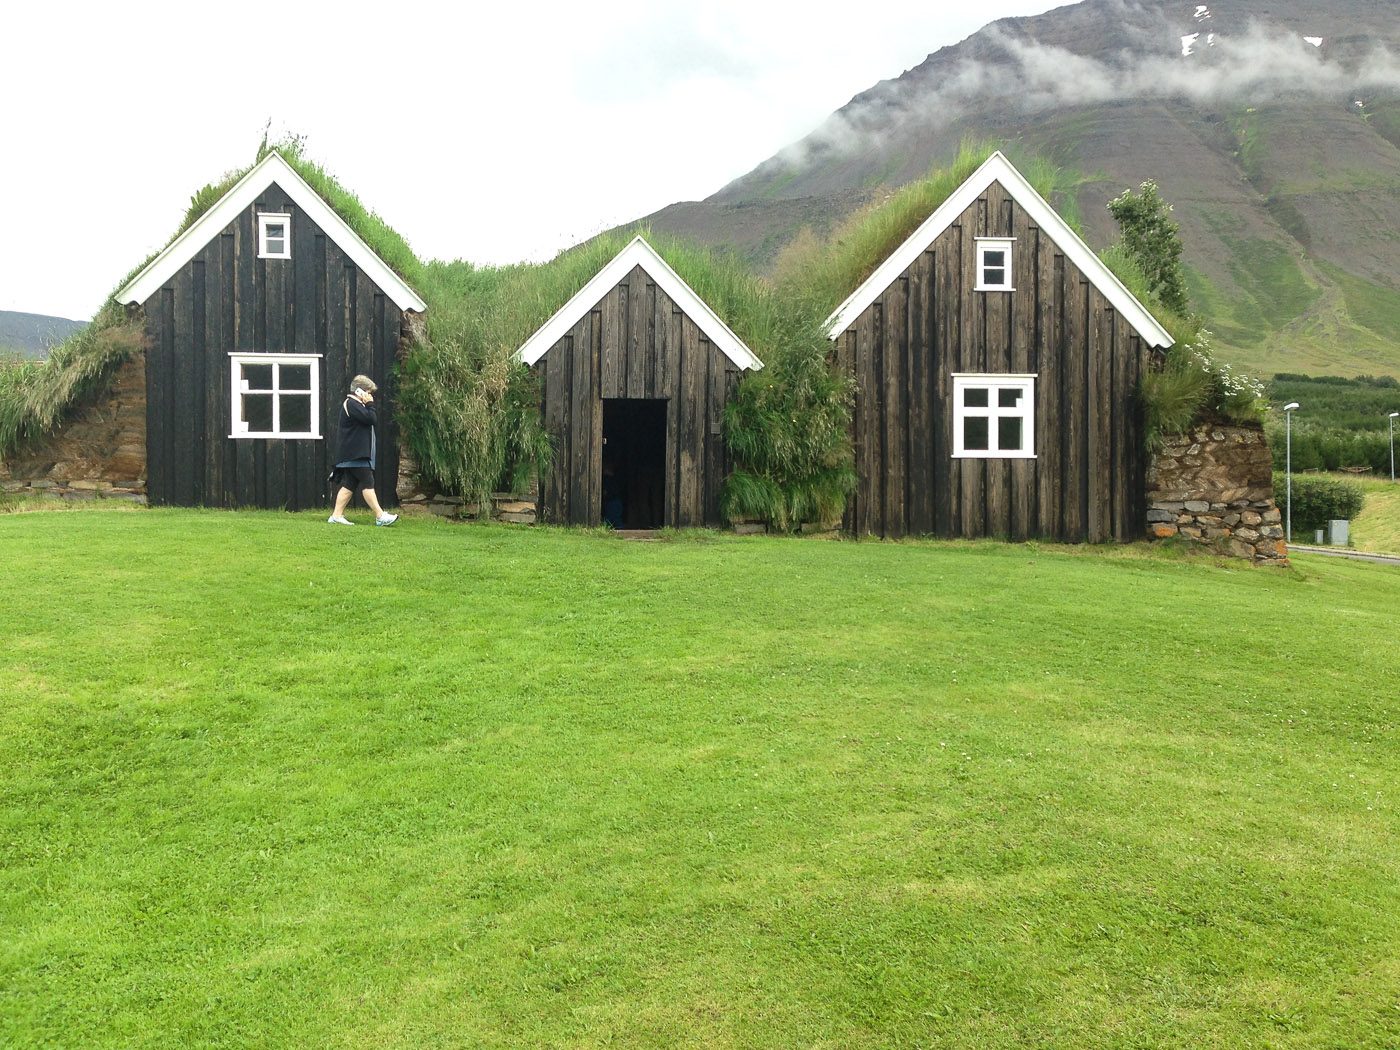 Northern Iceland - Back to Reykjavík. On vacation. - <a href='https://en.wikipedia.org/wiki/H%C3%B3lar' target='_blank' class='linksnormal'>Hólar</a> - <a href='https://en.wikipedia.org/wiki/Icelandic_turf_house' target='_blank' class='linksnormal'>turf house</a> Nýibæ. I. (27 July 2014)